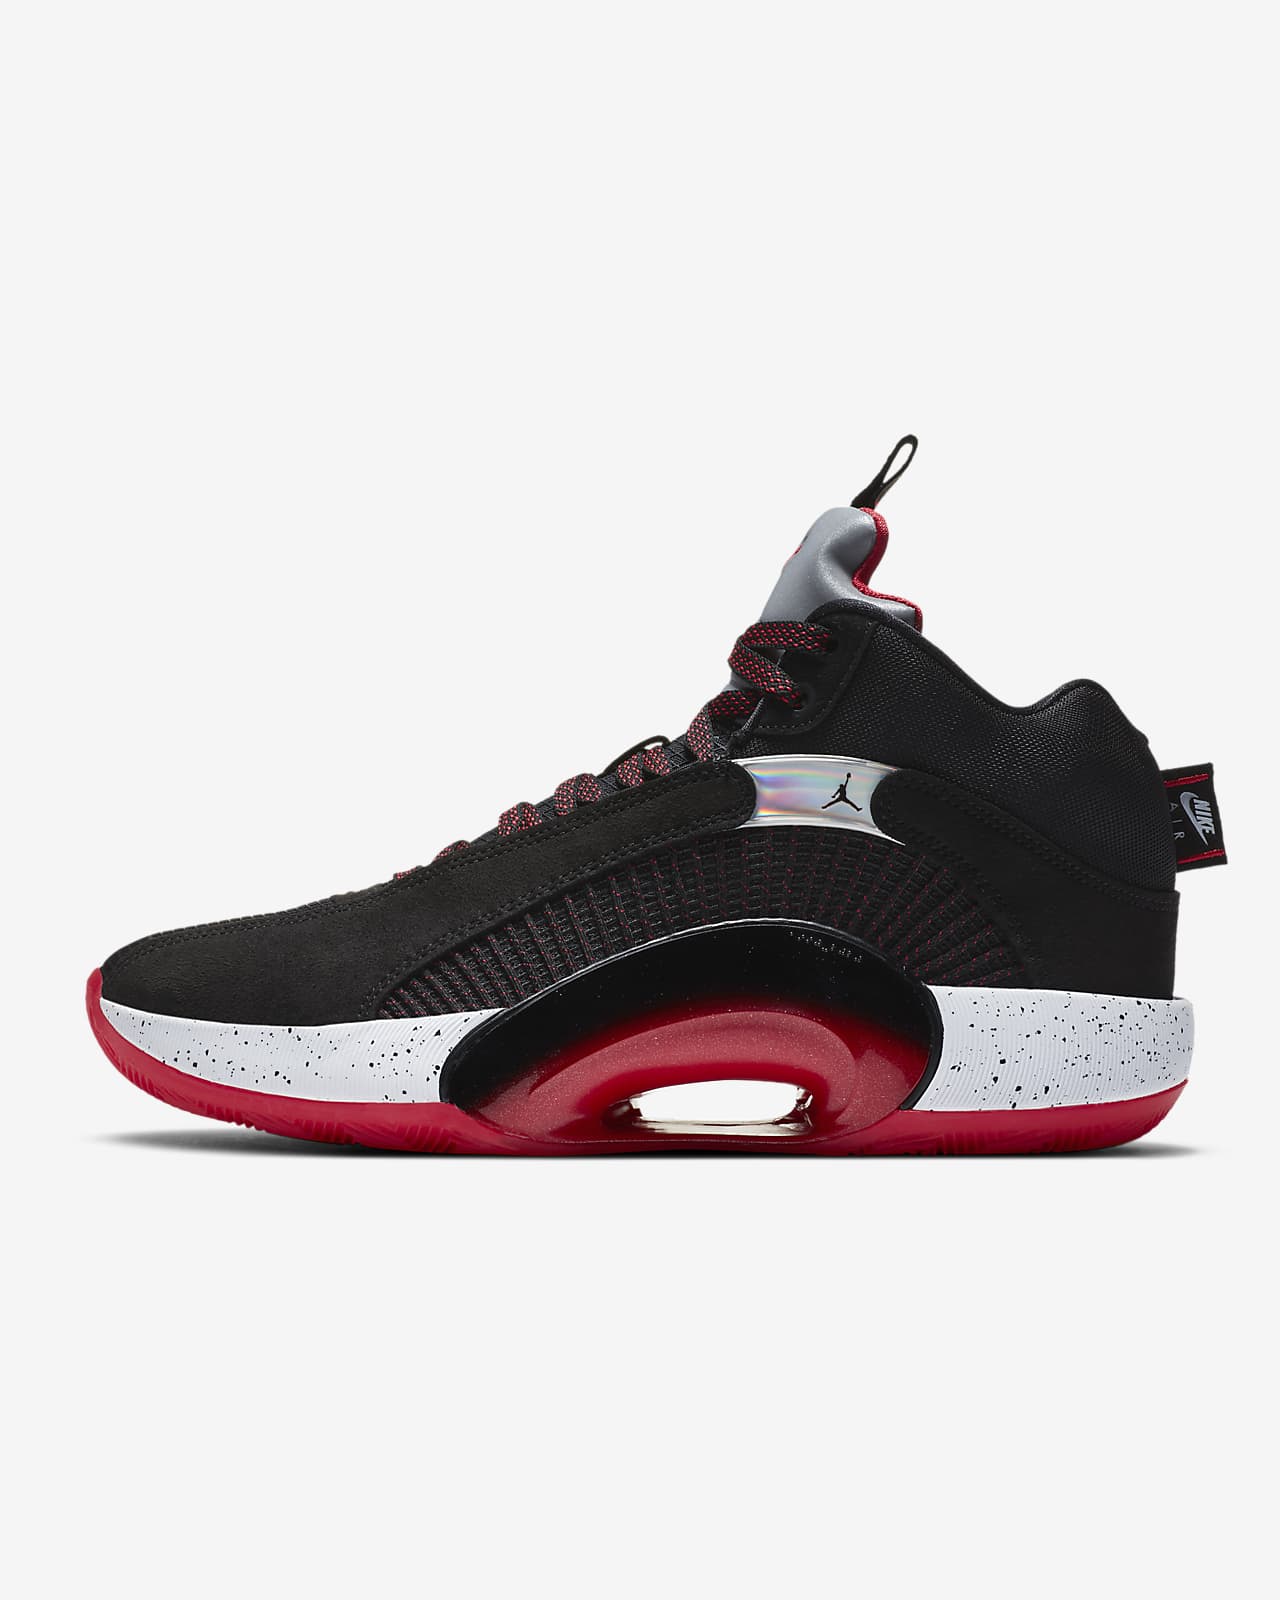 Air Jordan XXXV Basketball Shoe